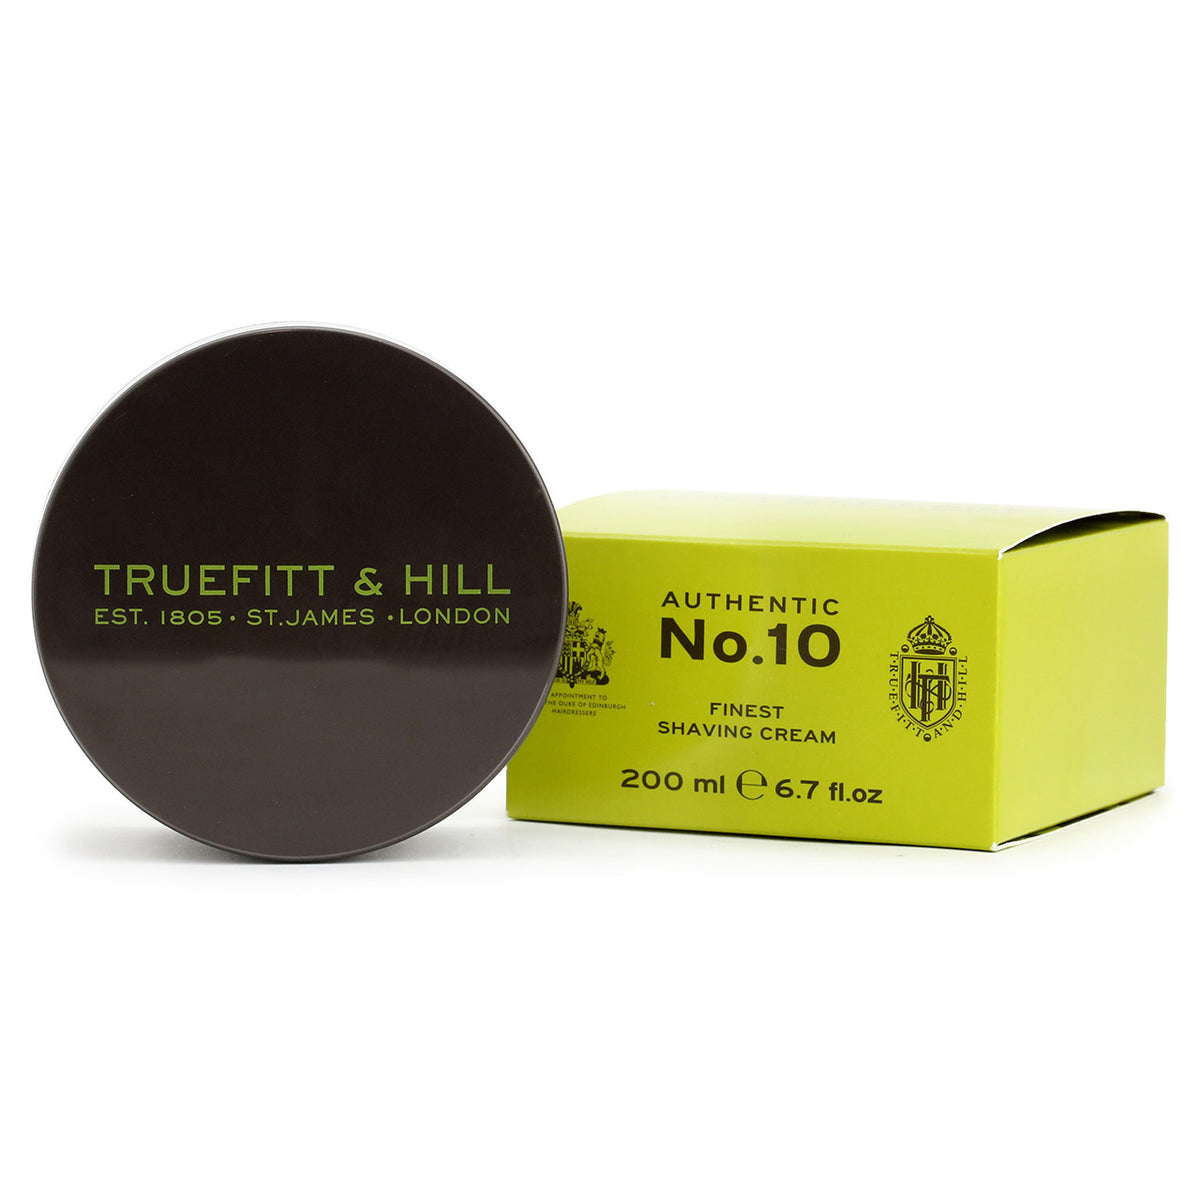 Truefitt &amp; Hill Authentic No 10 Finest Shaving cream, 200ml tub and box